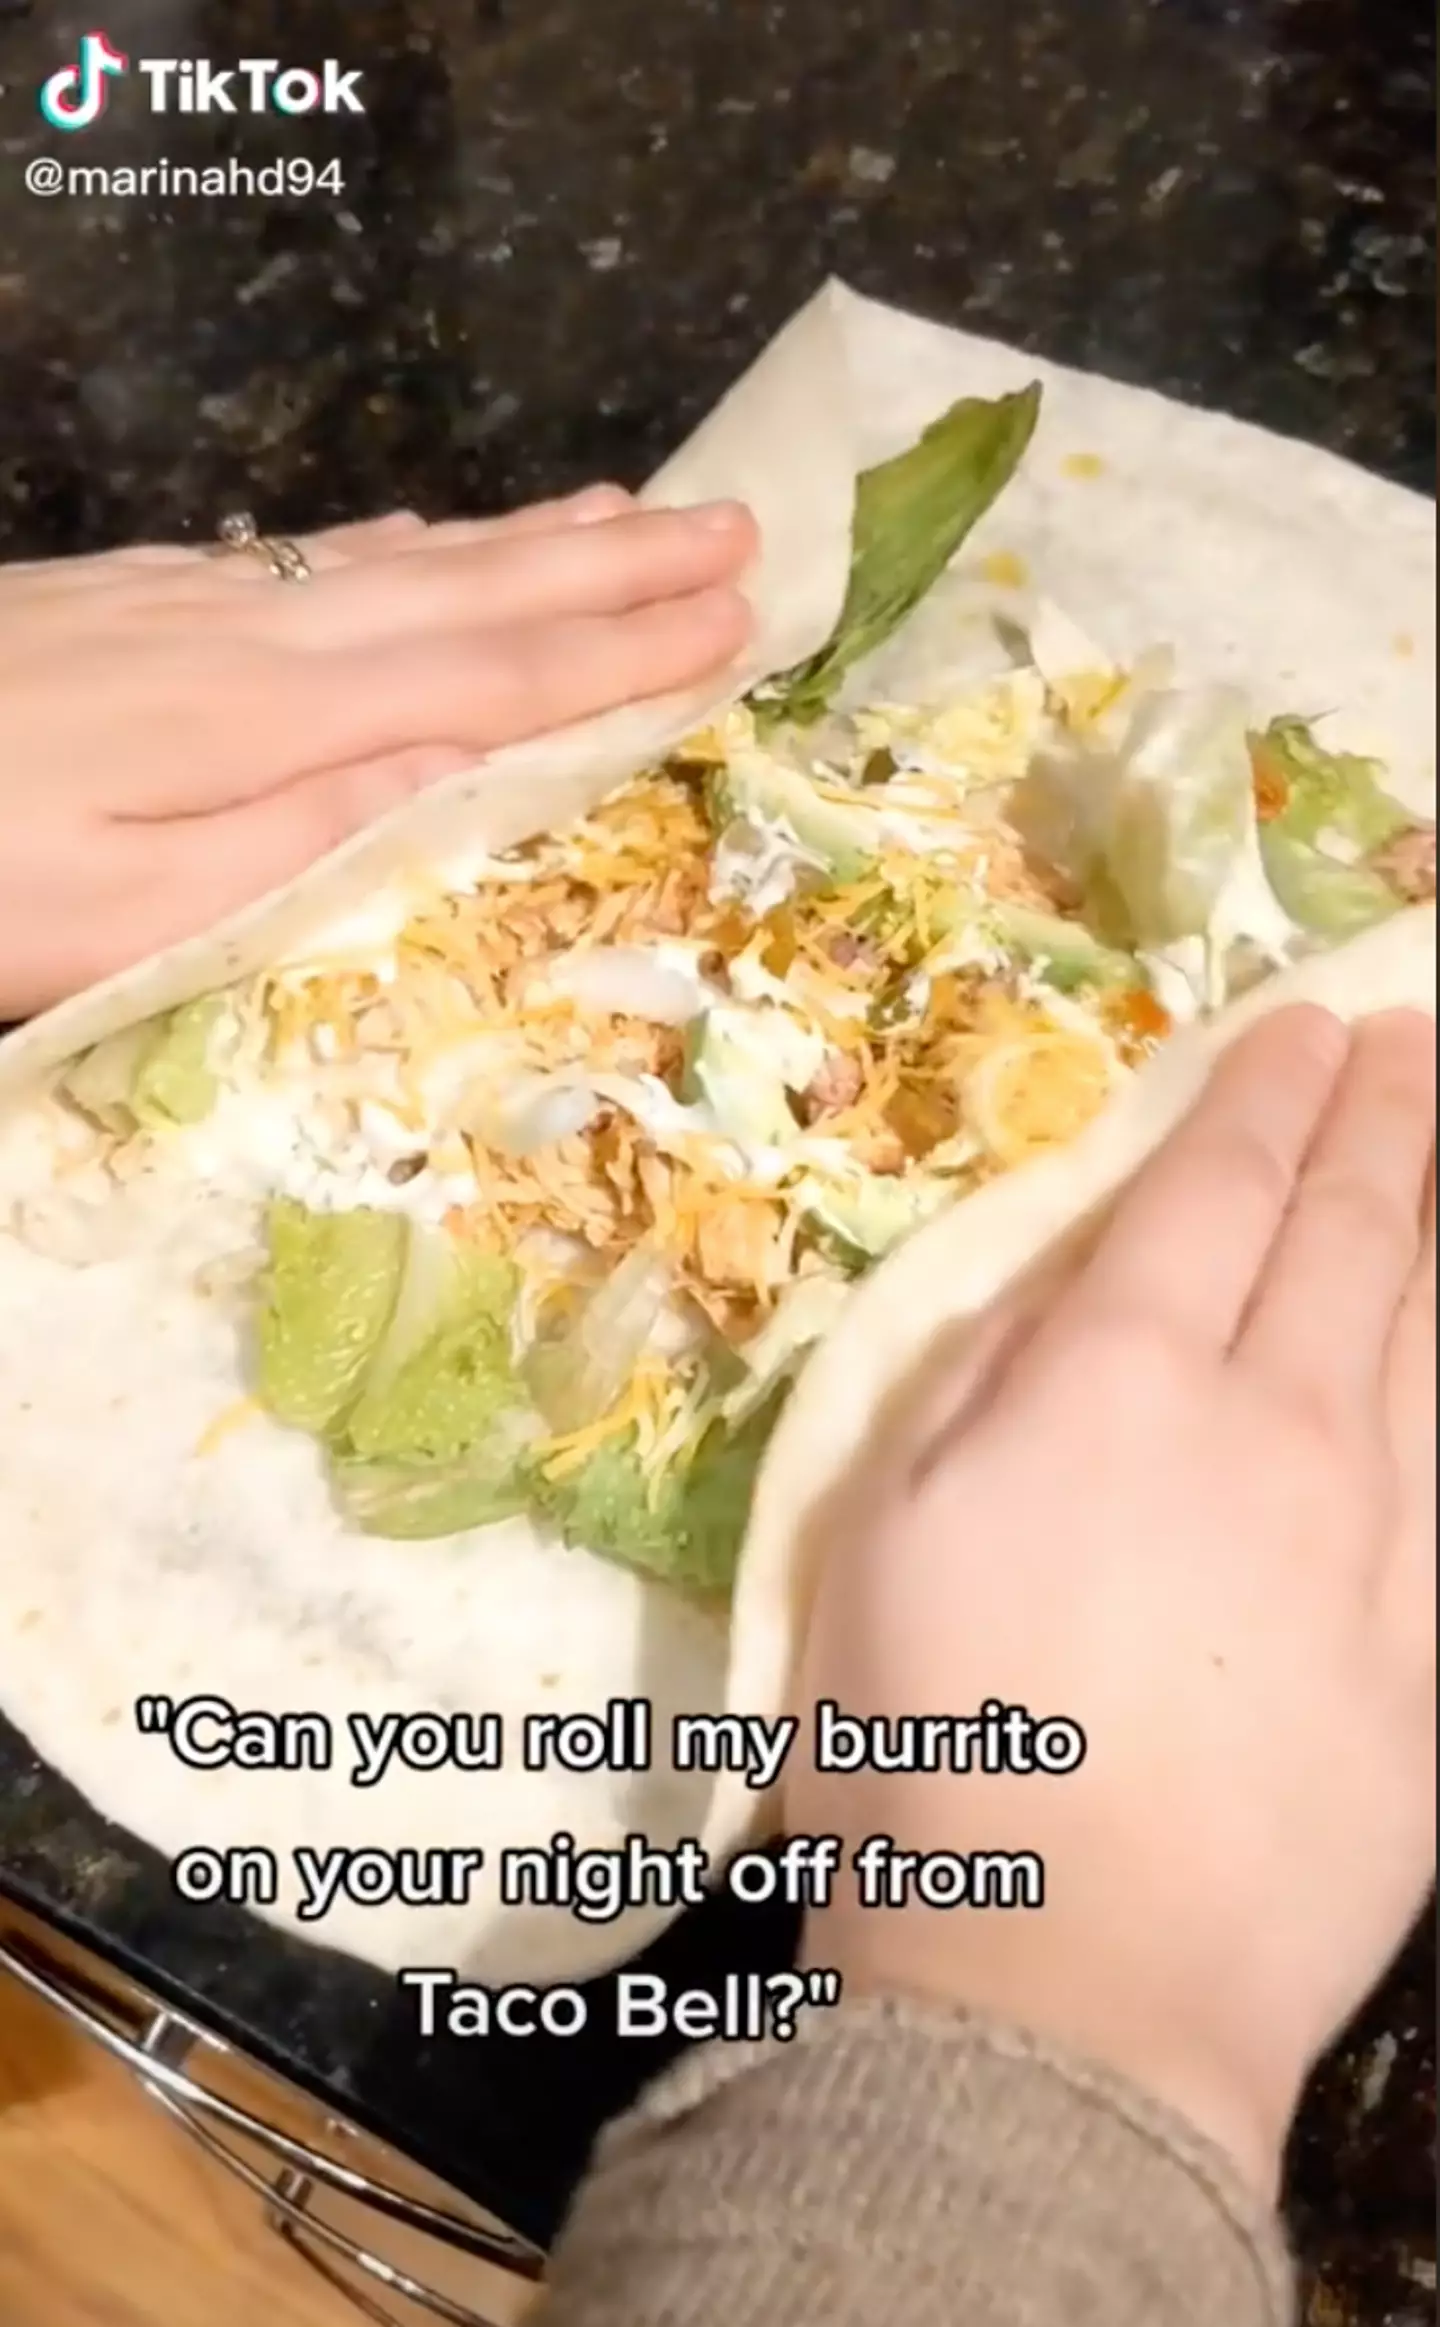 Marina first folds the burrito (